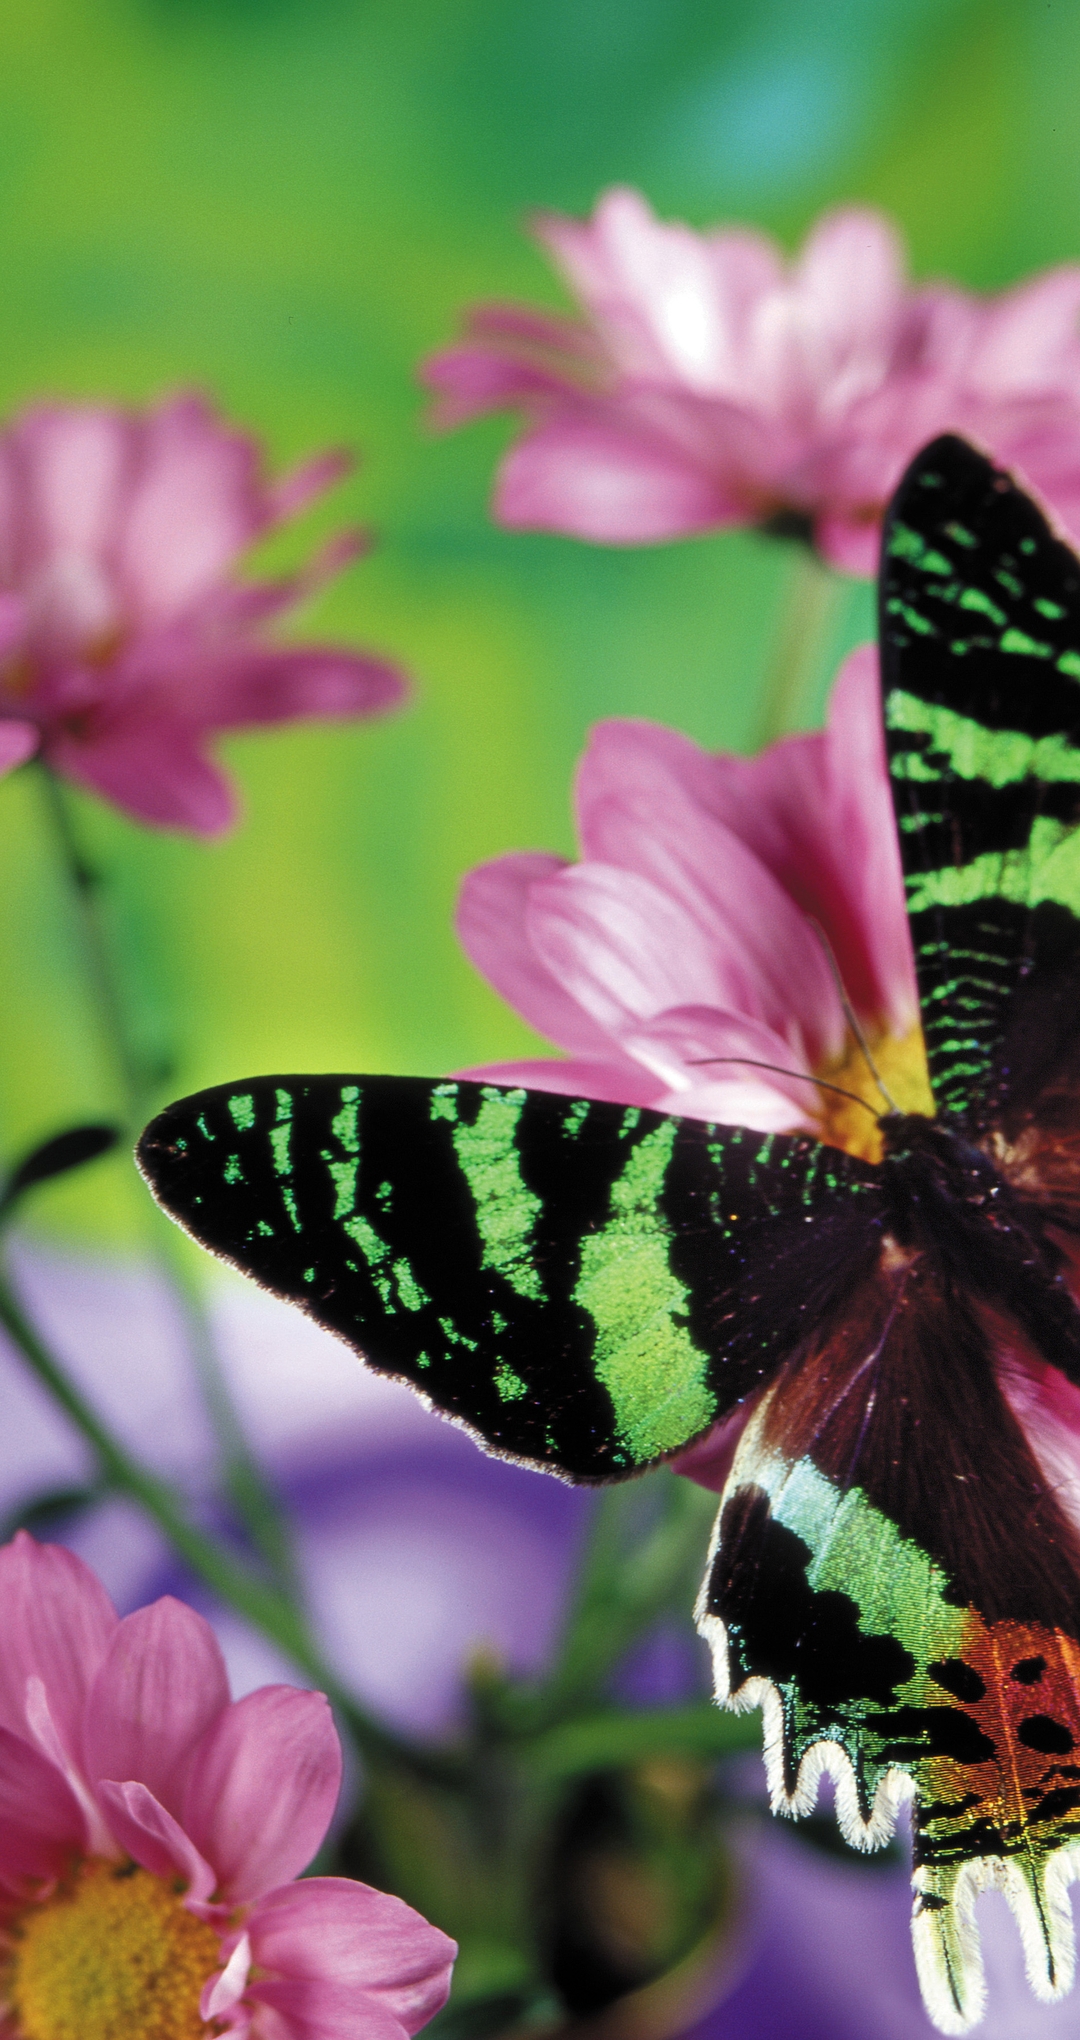 Image: Butterfly, flowers, blur